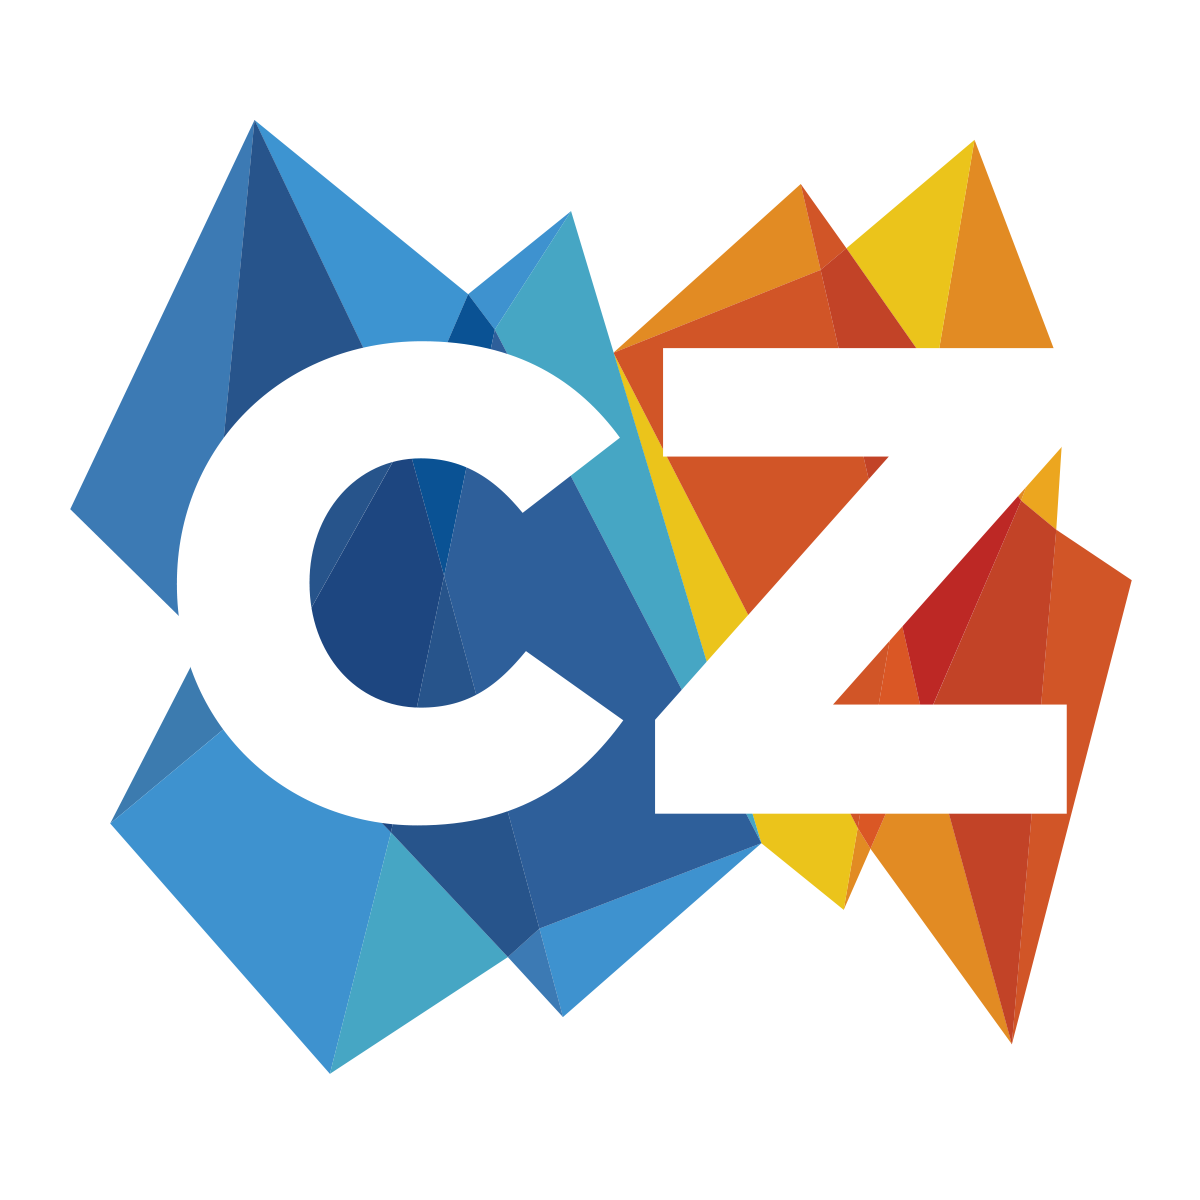 CloudZero CostFormation Toolkit